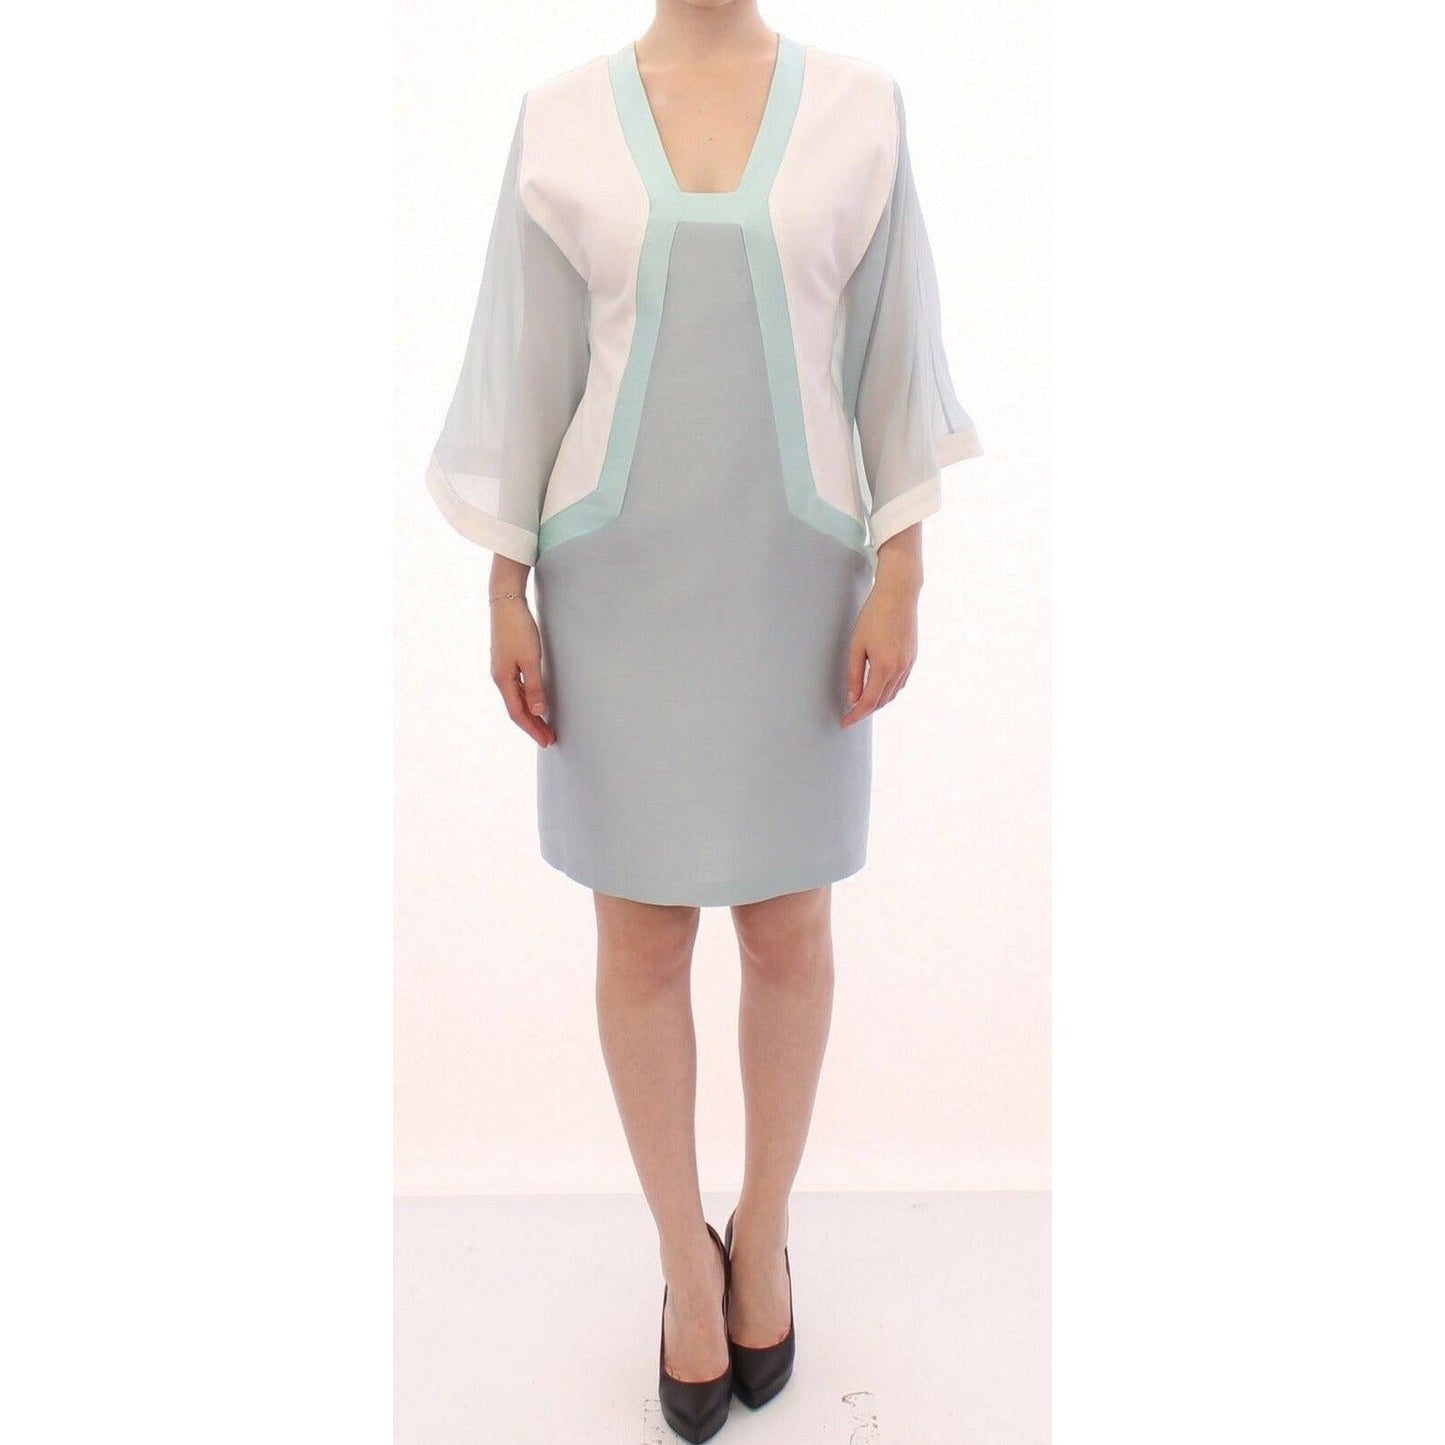 Sergei Grinko Elegant Turquoise Silk Sheath Dress WOMAN DRESSES white-silk-sheath-formal-turquoise-dress s-l1600-26-2-809f3da7-c13.jpg